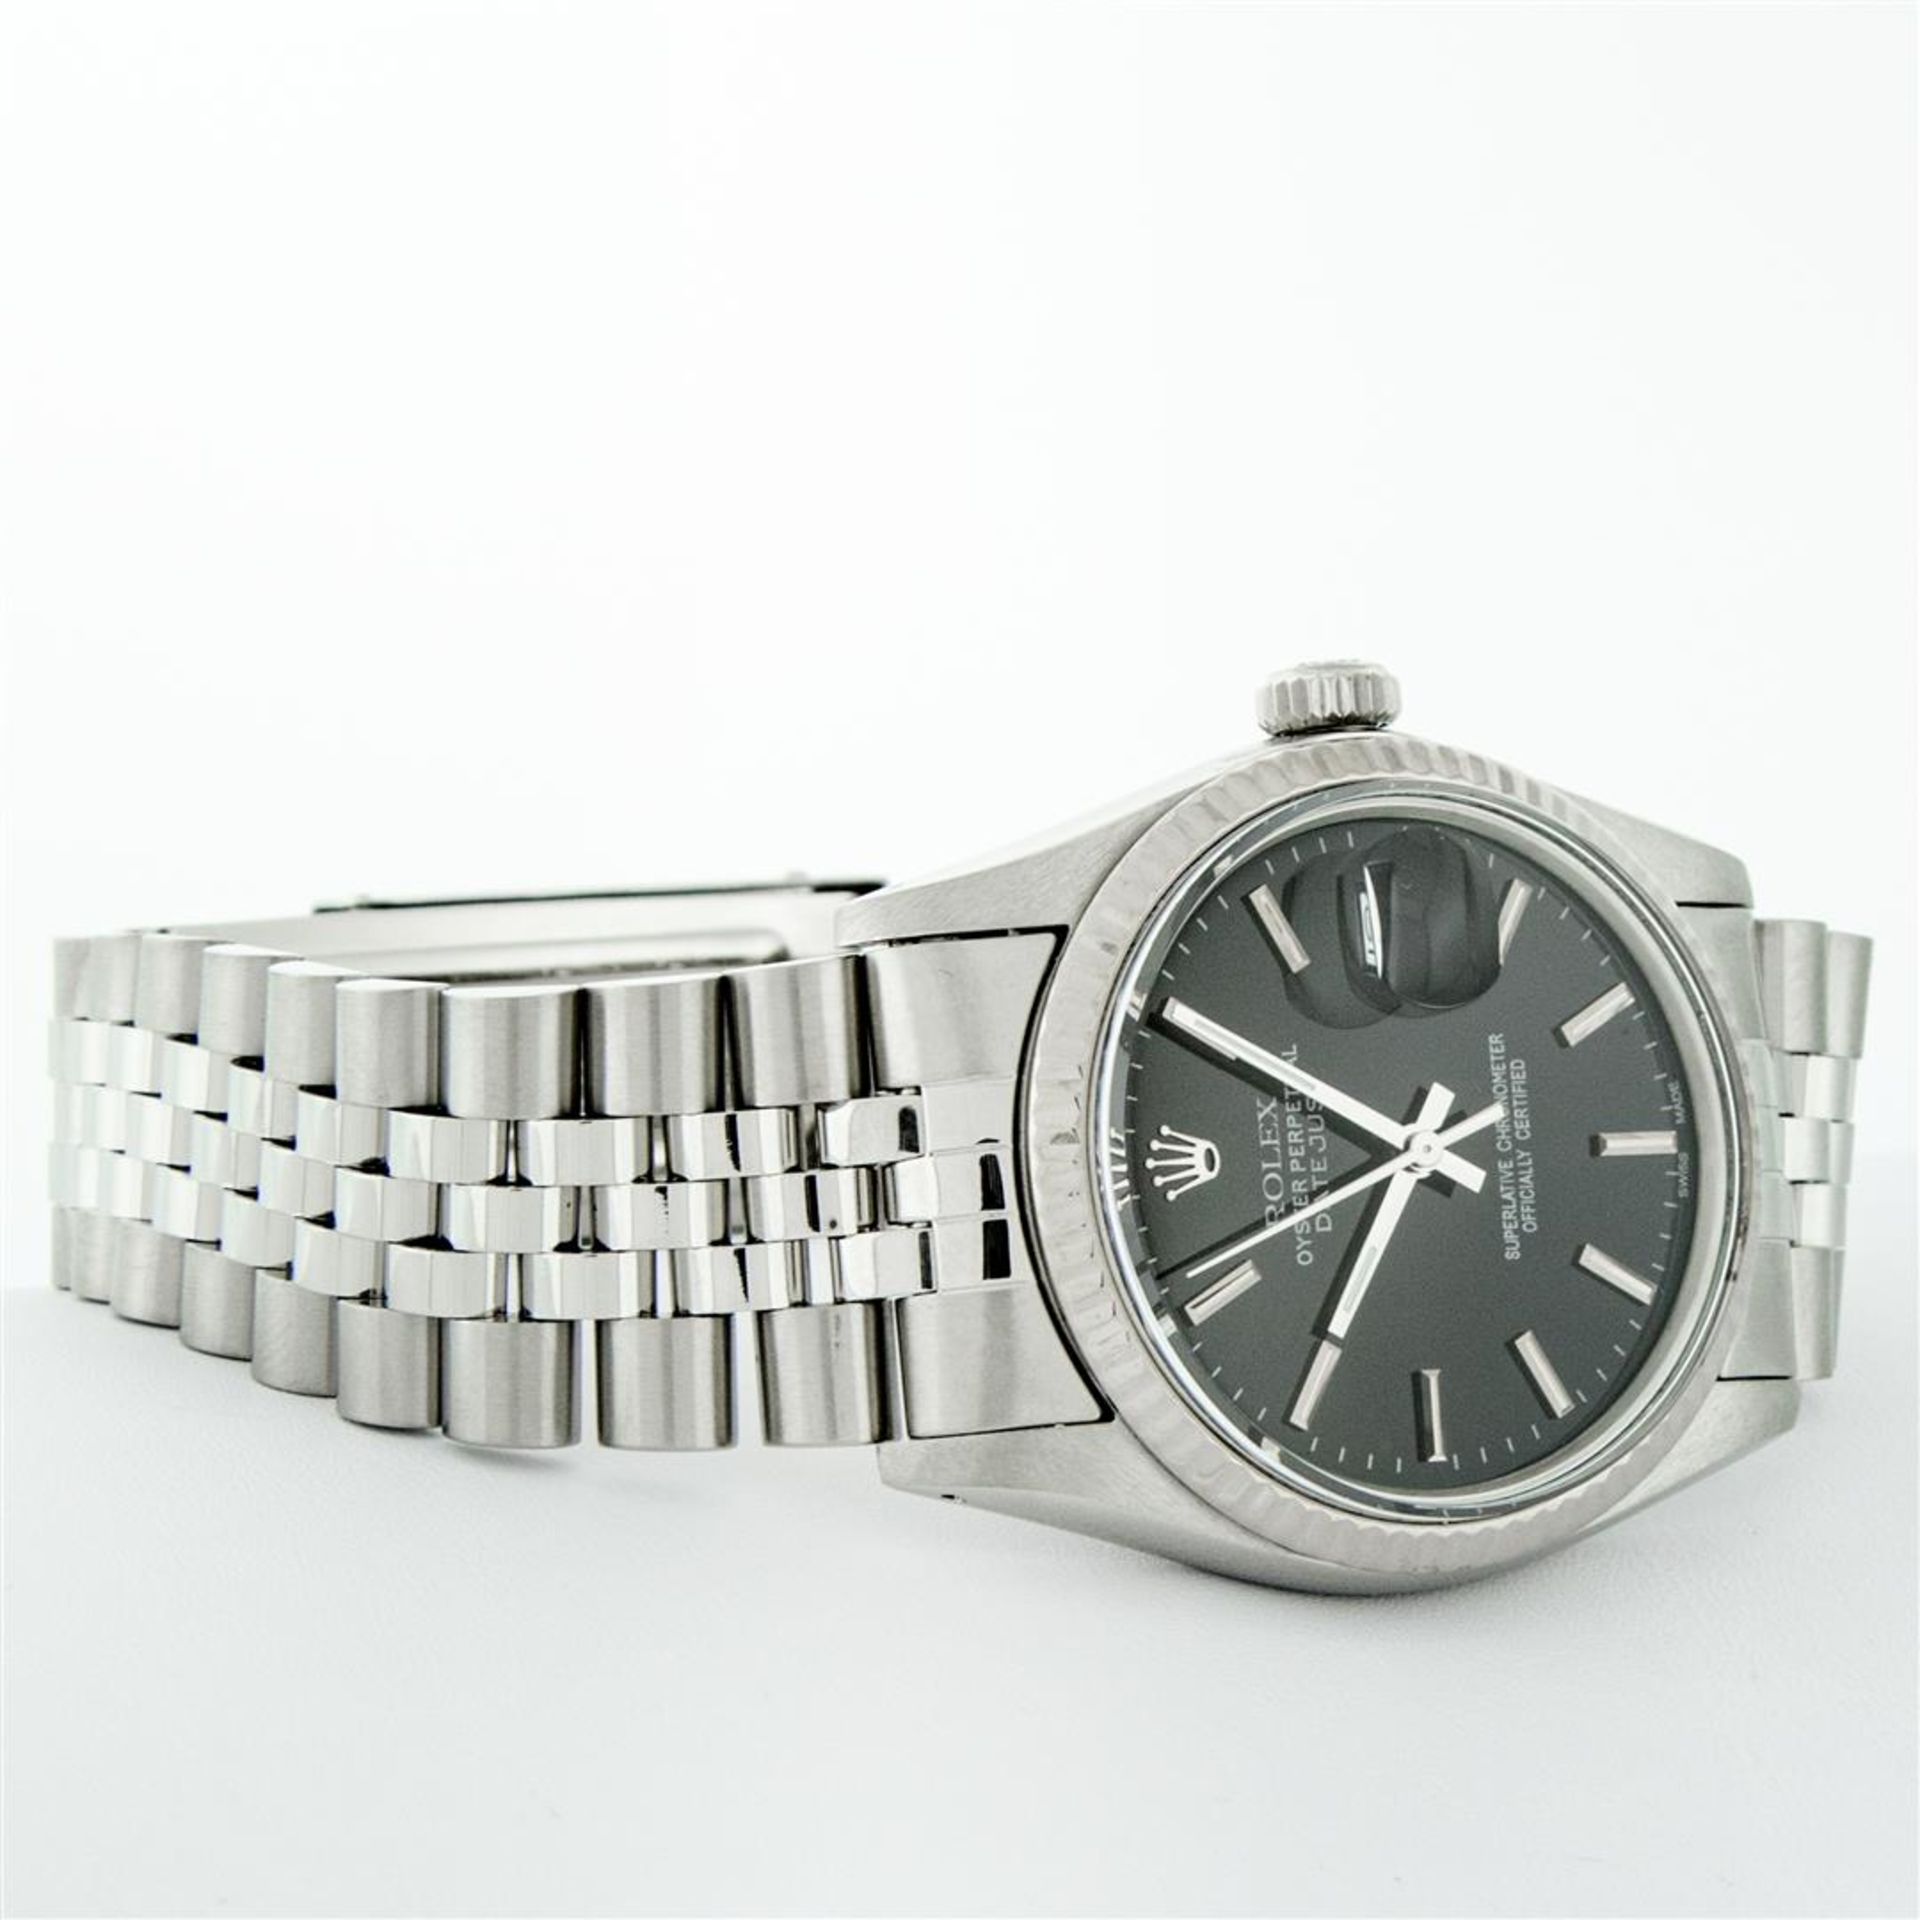 Rolex Mens Stainless Steel Black Index 36mm Datejust Wristwatch - Image 5 of 9